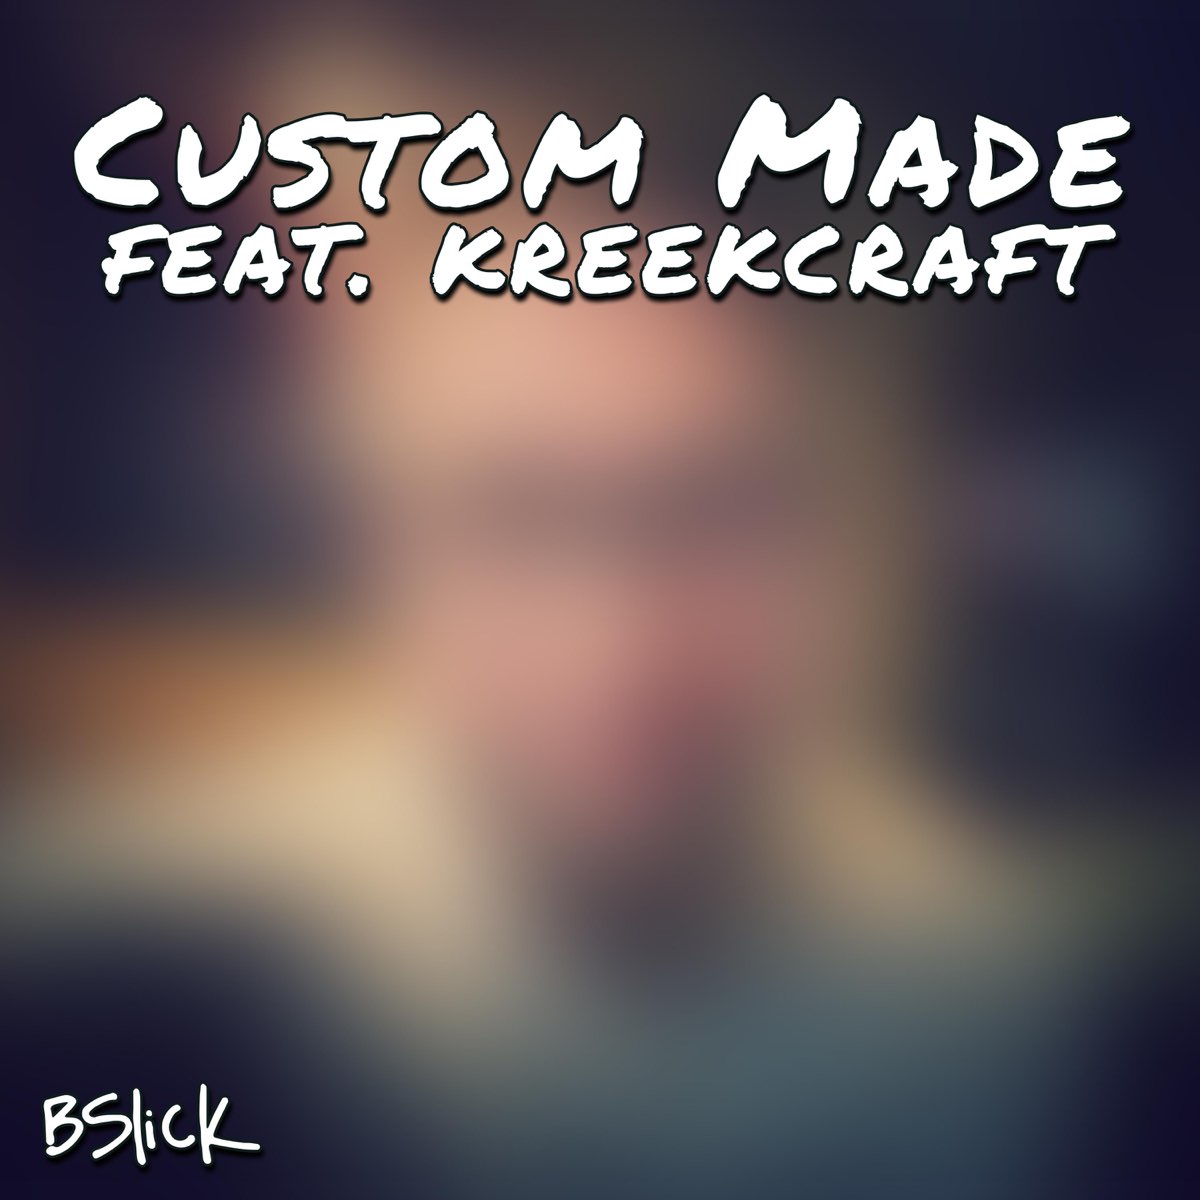 Custom Made Feat Kreekcraft Single By Bslick On Apple Music - heideland roblox song